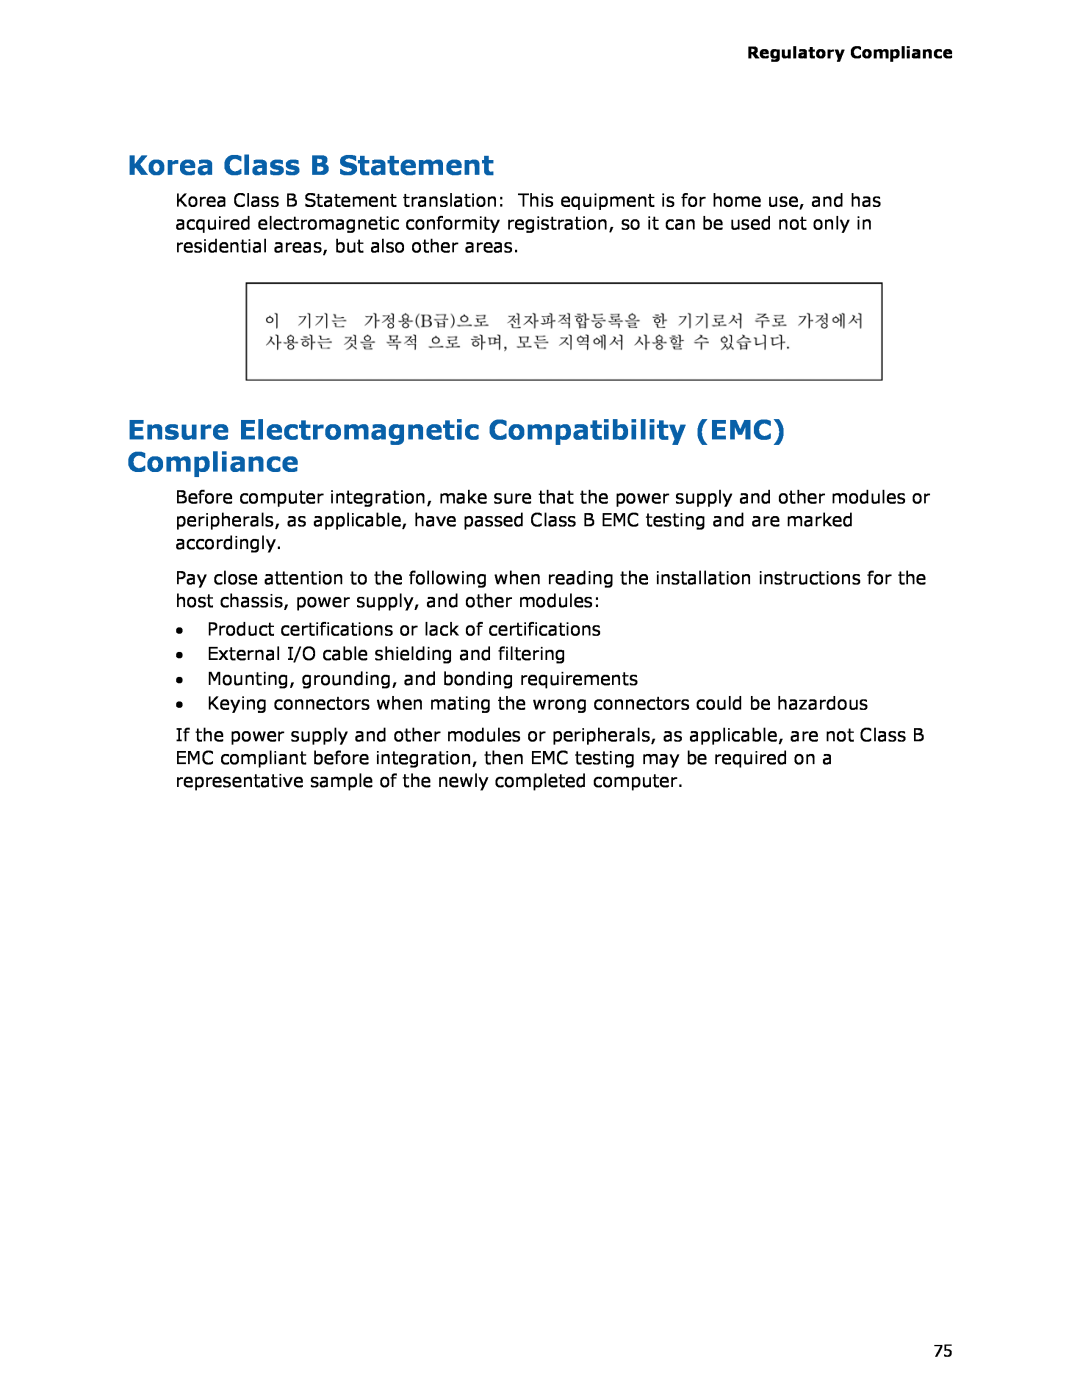 Intel BLKDH67GDB3, G13841-001 manual Korea Class B Statement, Ensure Electromagnetic Compatibility EMC Compliance 